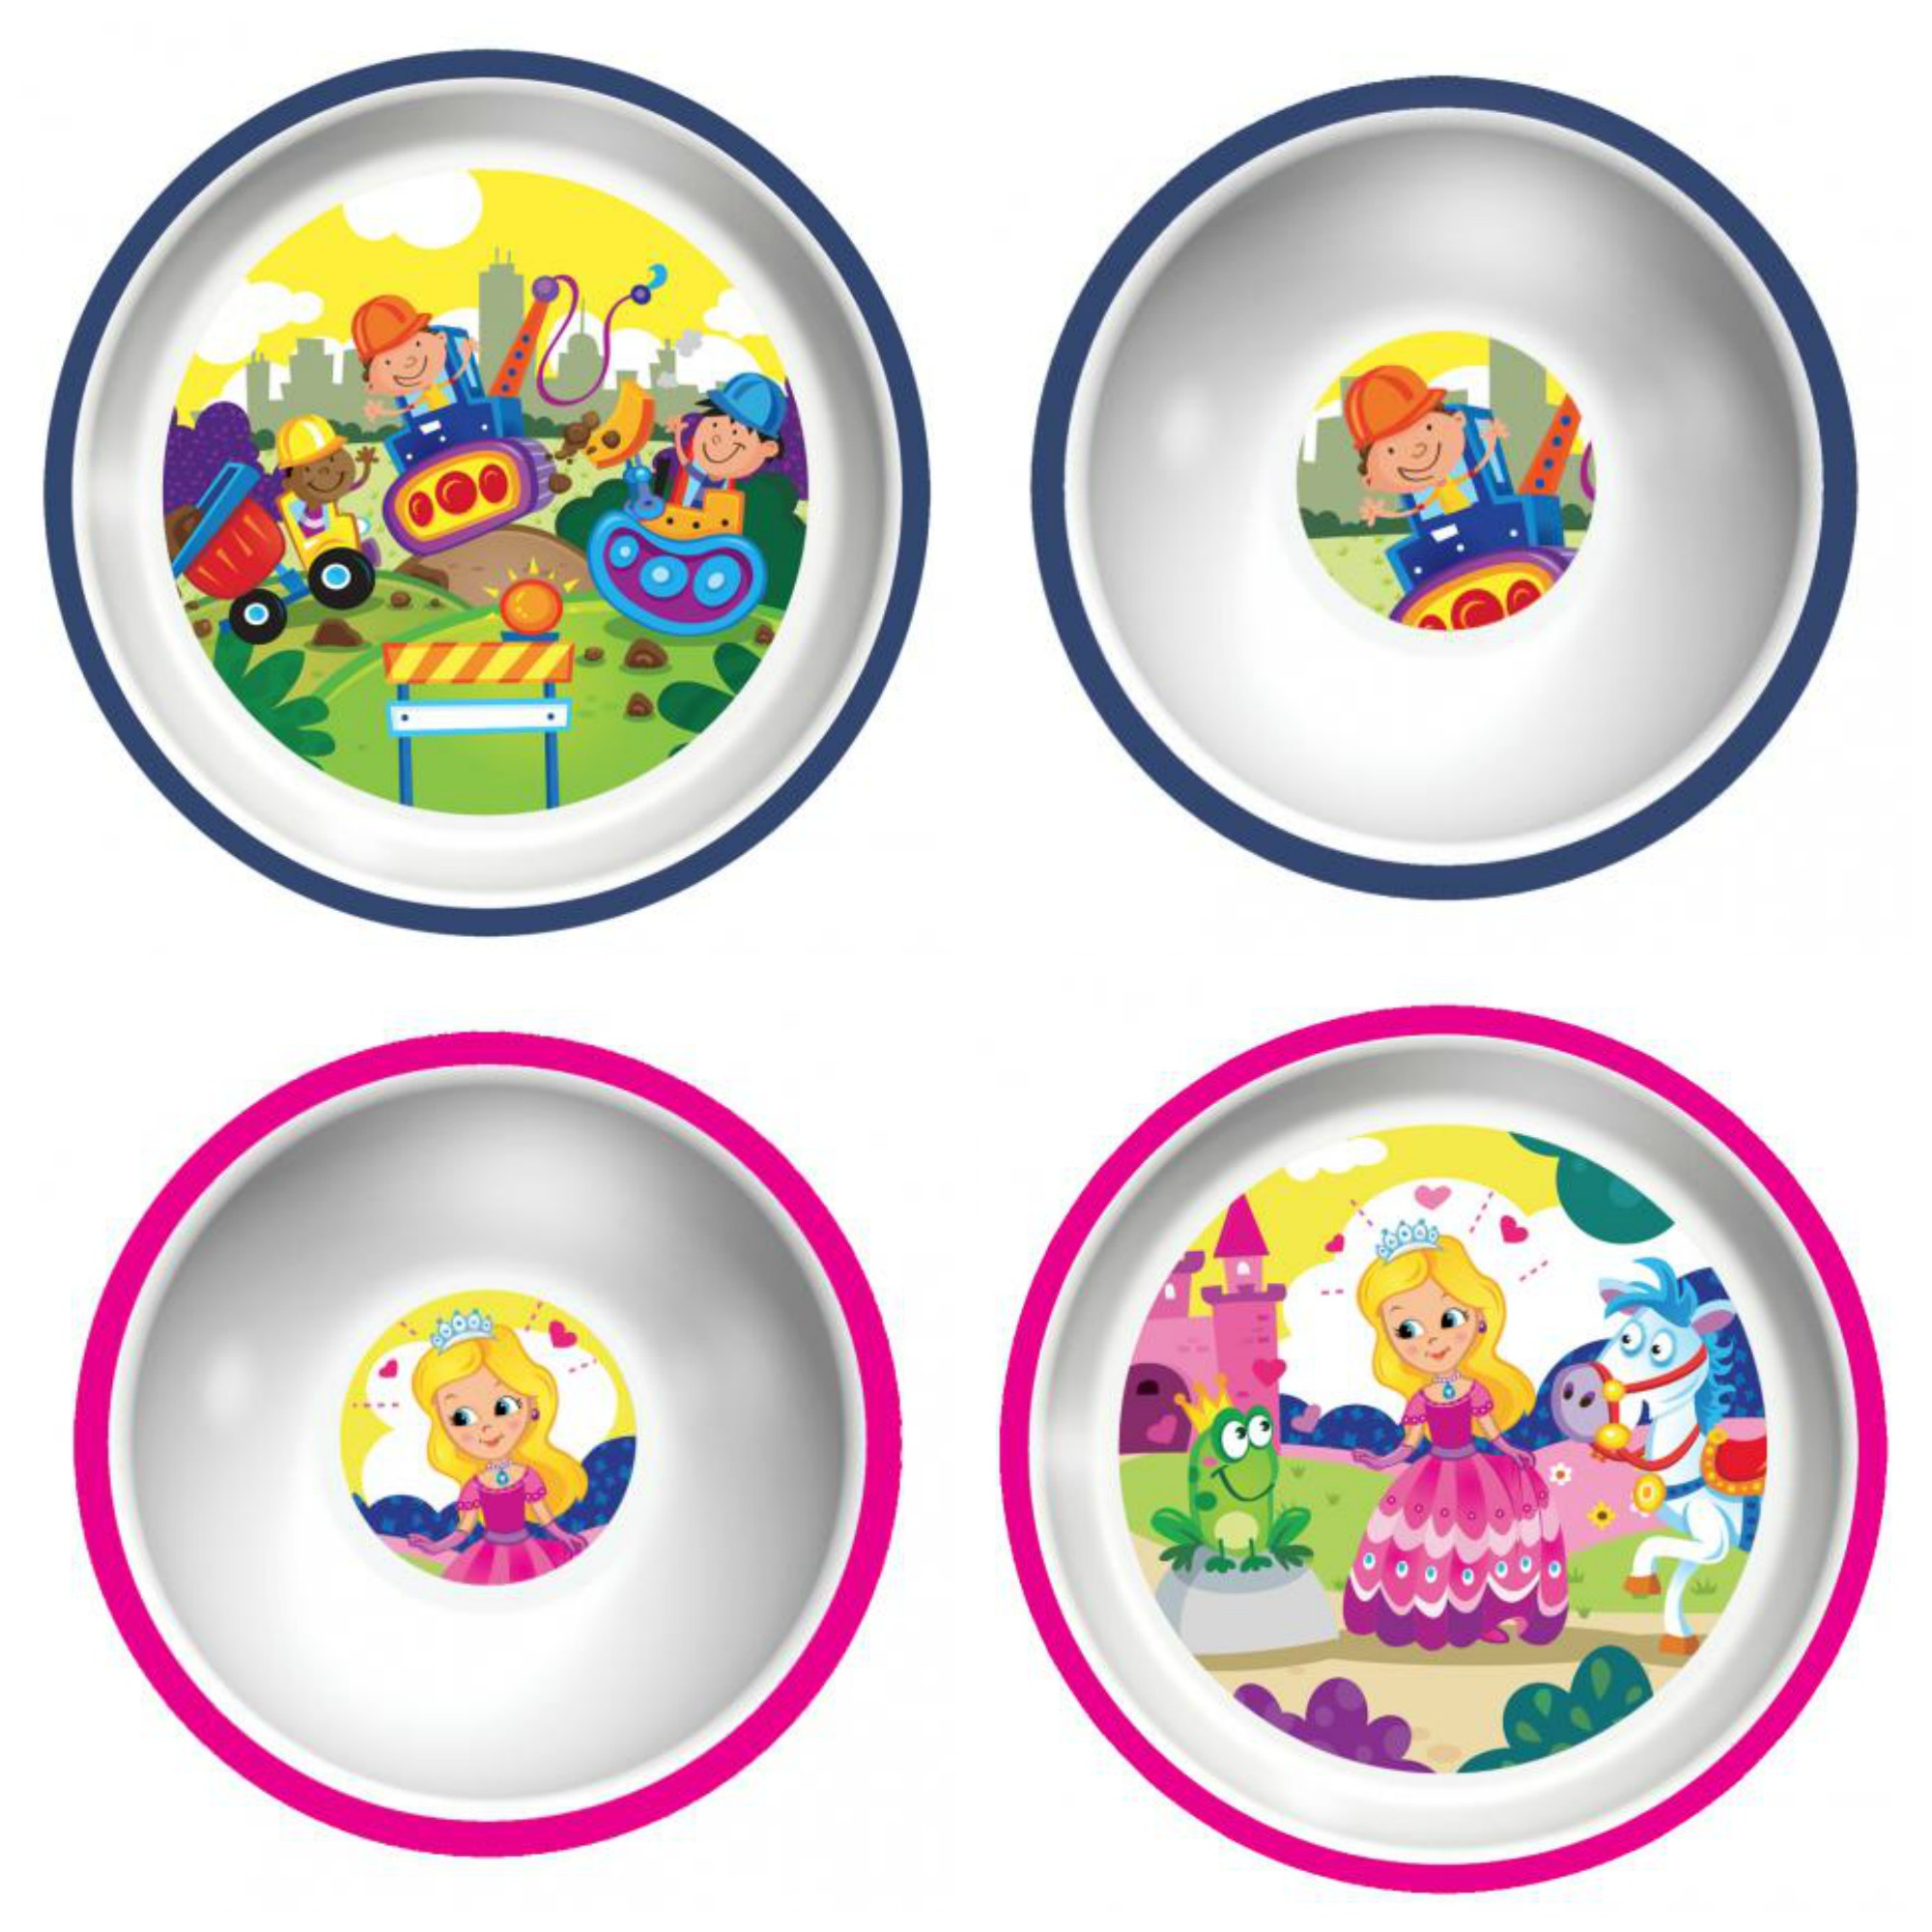 Playtex Recalls Children’s Plates and Bowls Due to Choking Hazard